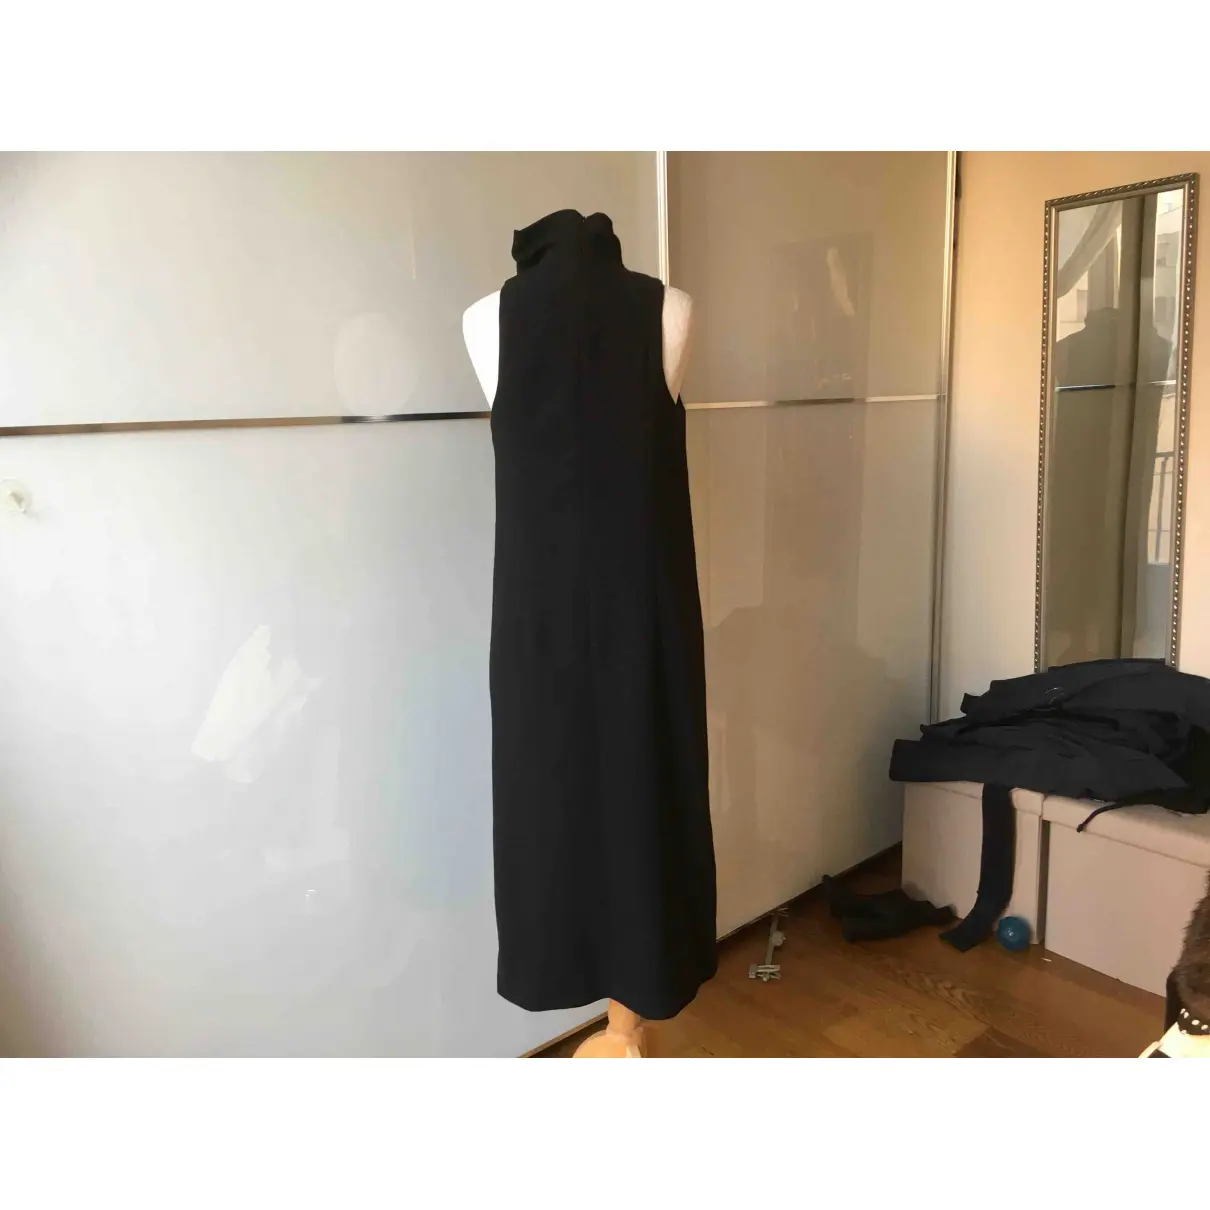 Buy C/MEO Mid-length dress online